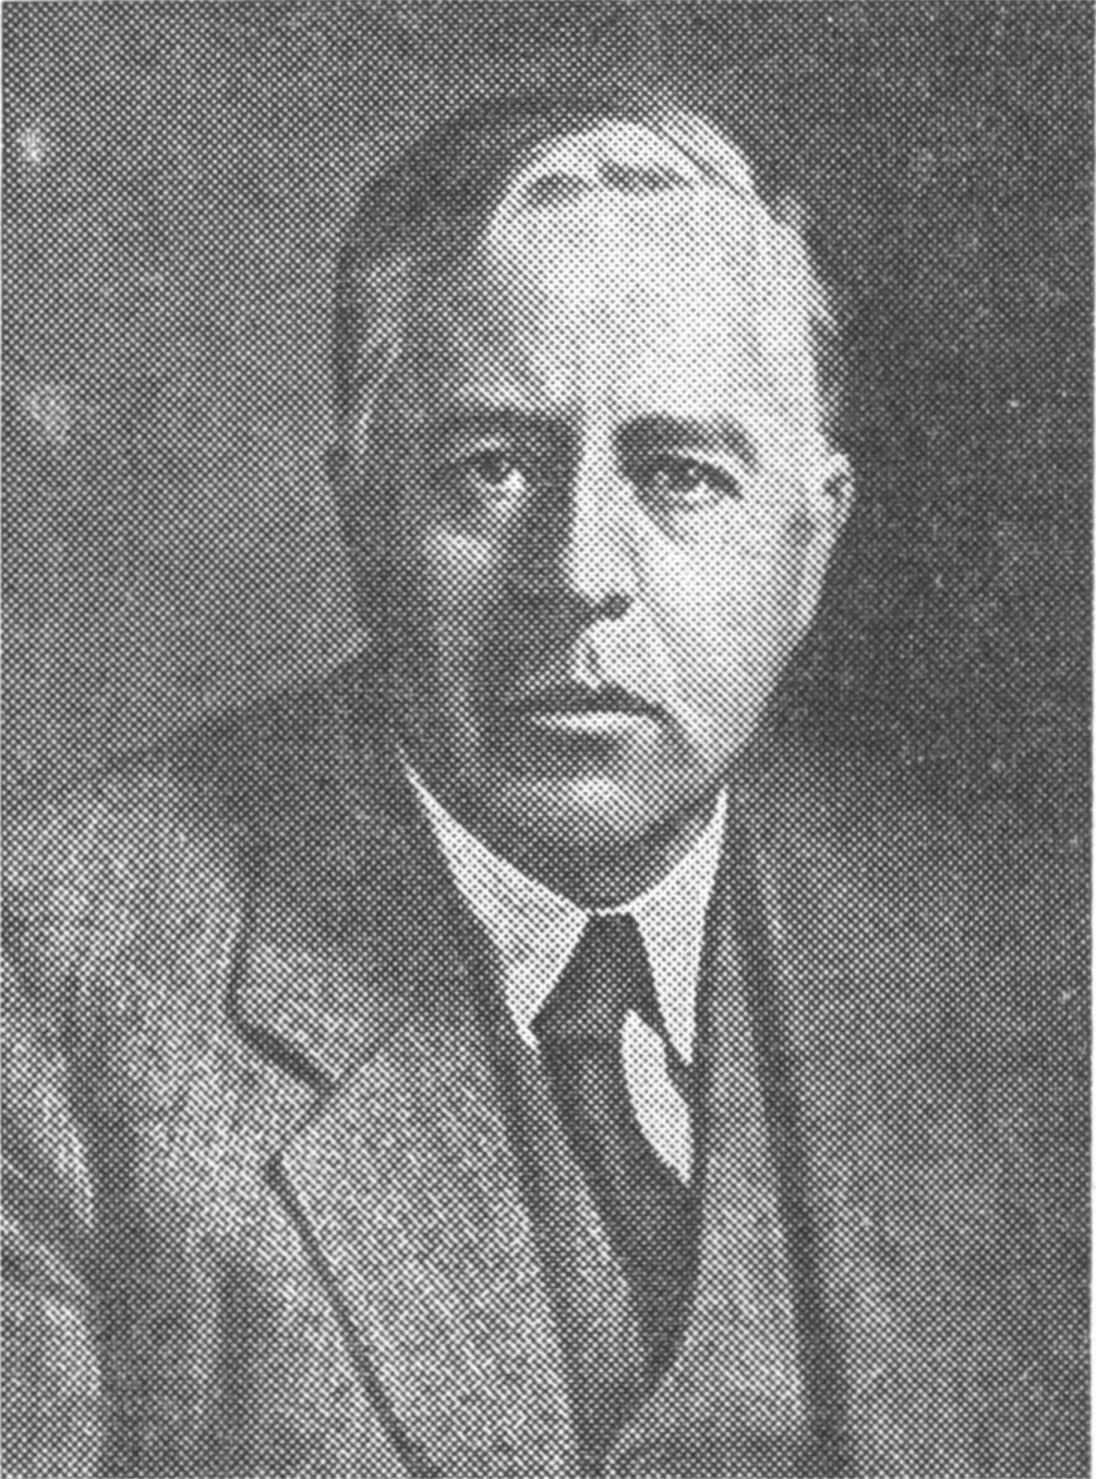 Джеймс Хопвуд Джинс (1877—1946)